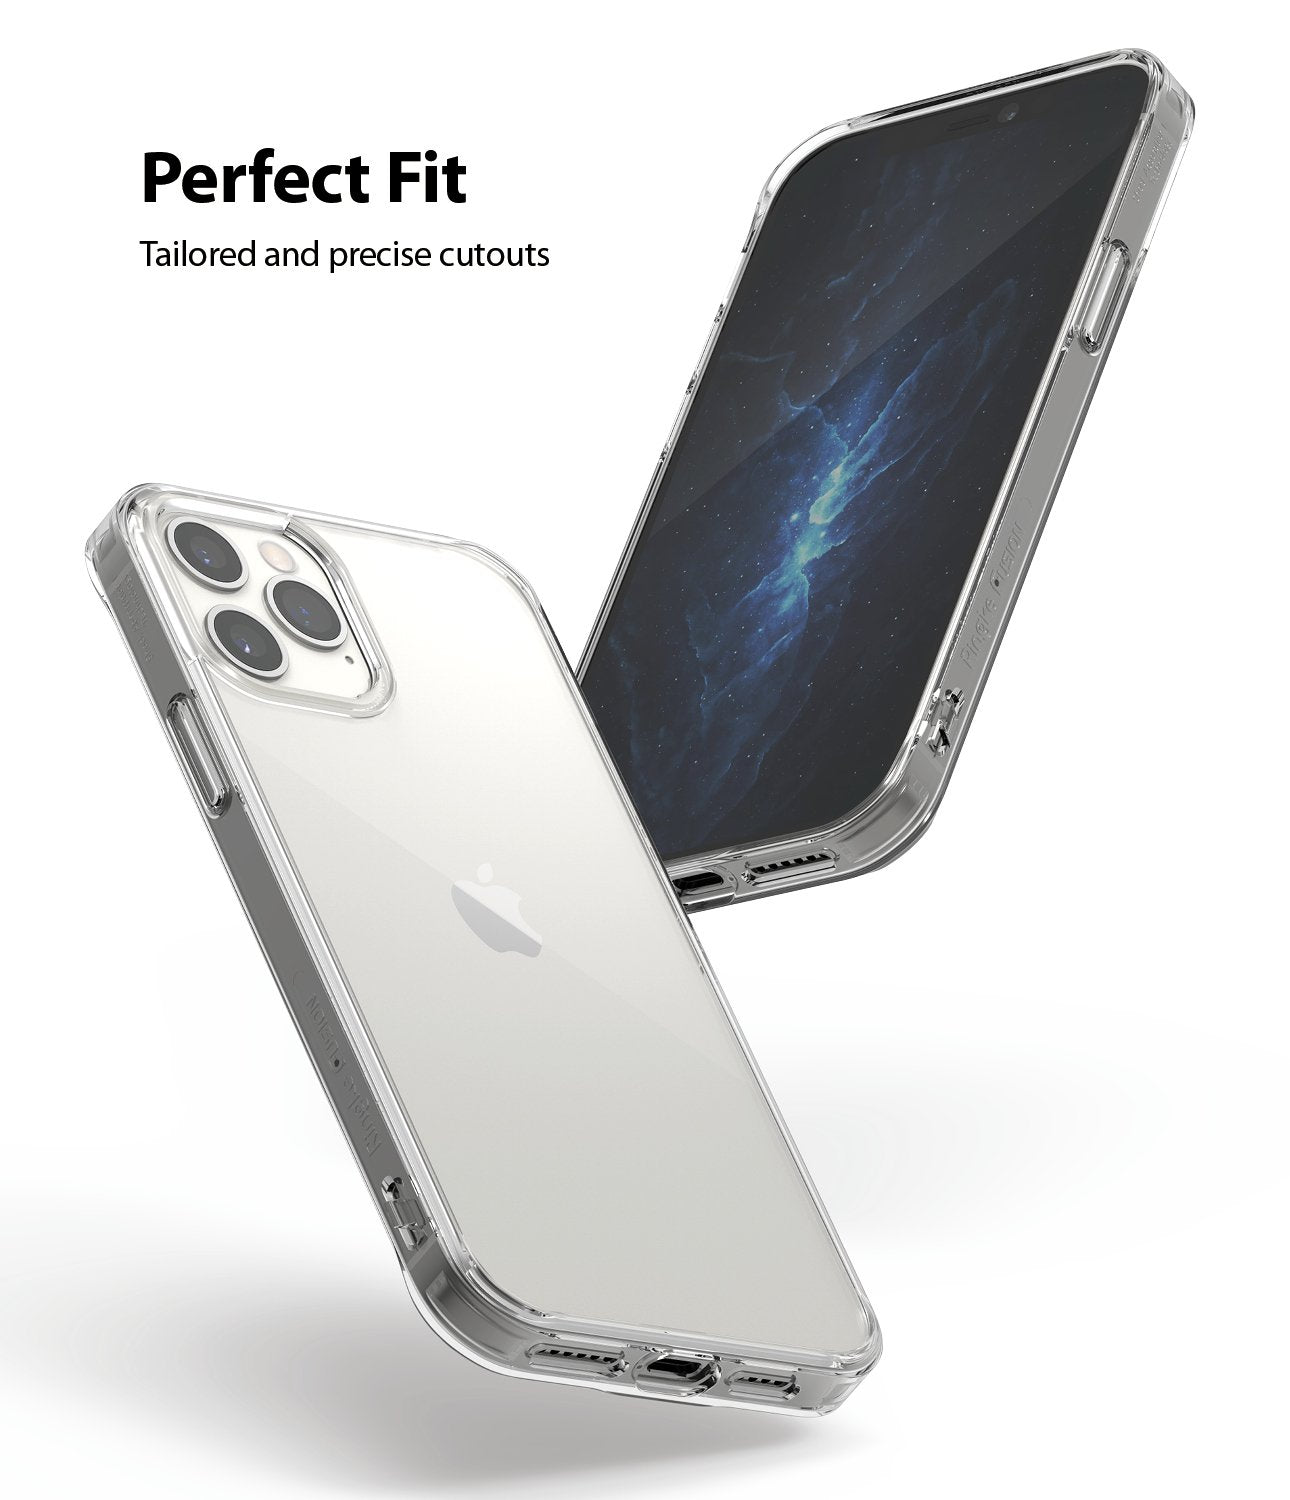 RINGKE Fusion iPhone 12 Pro Max